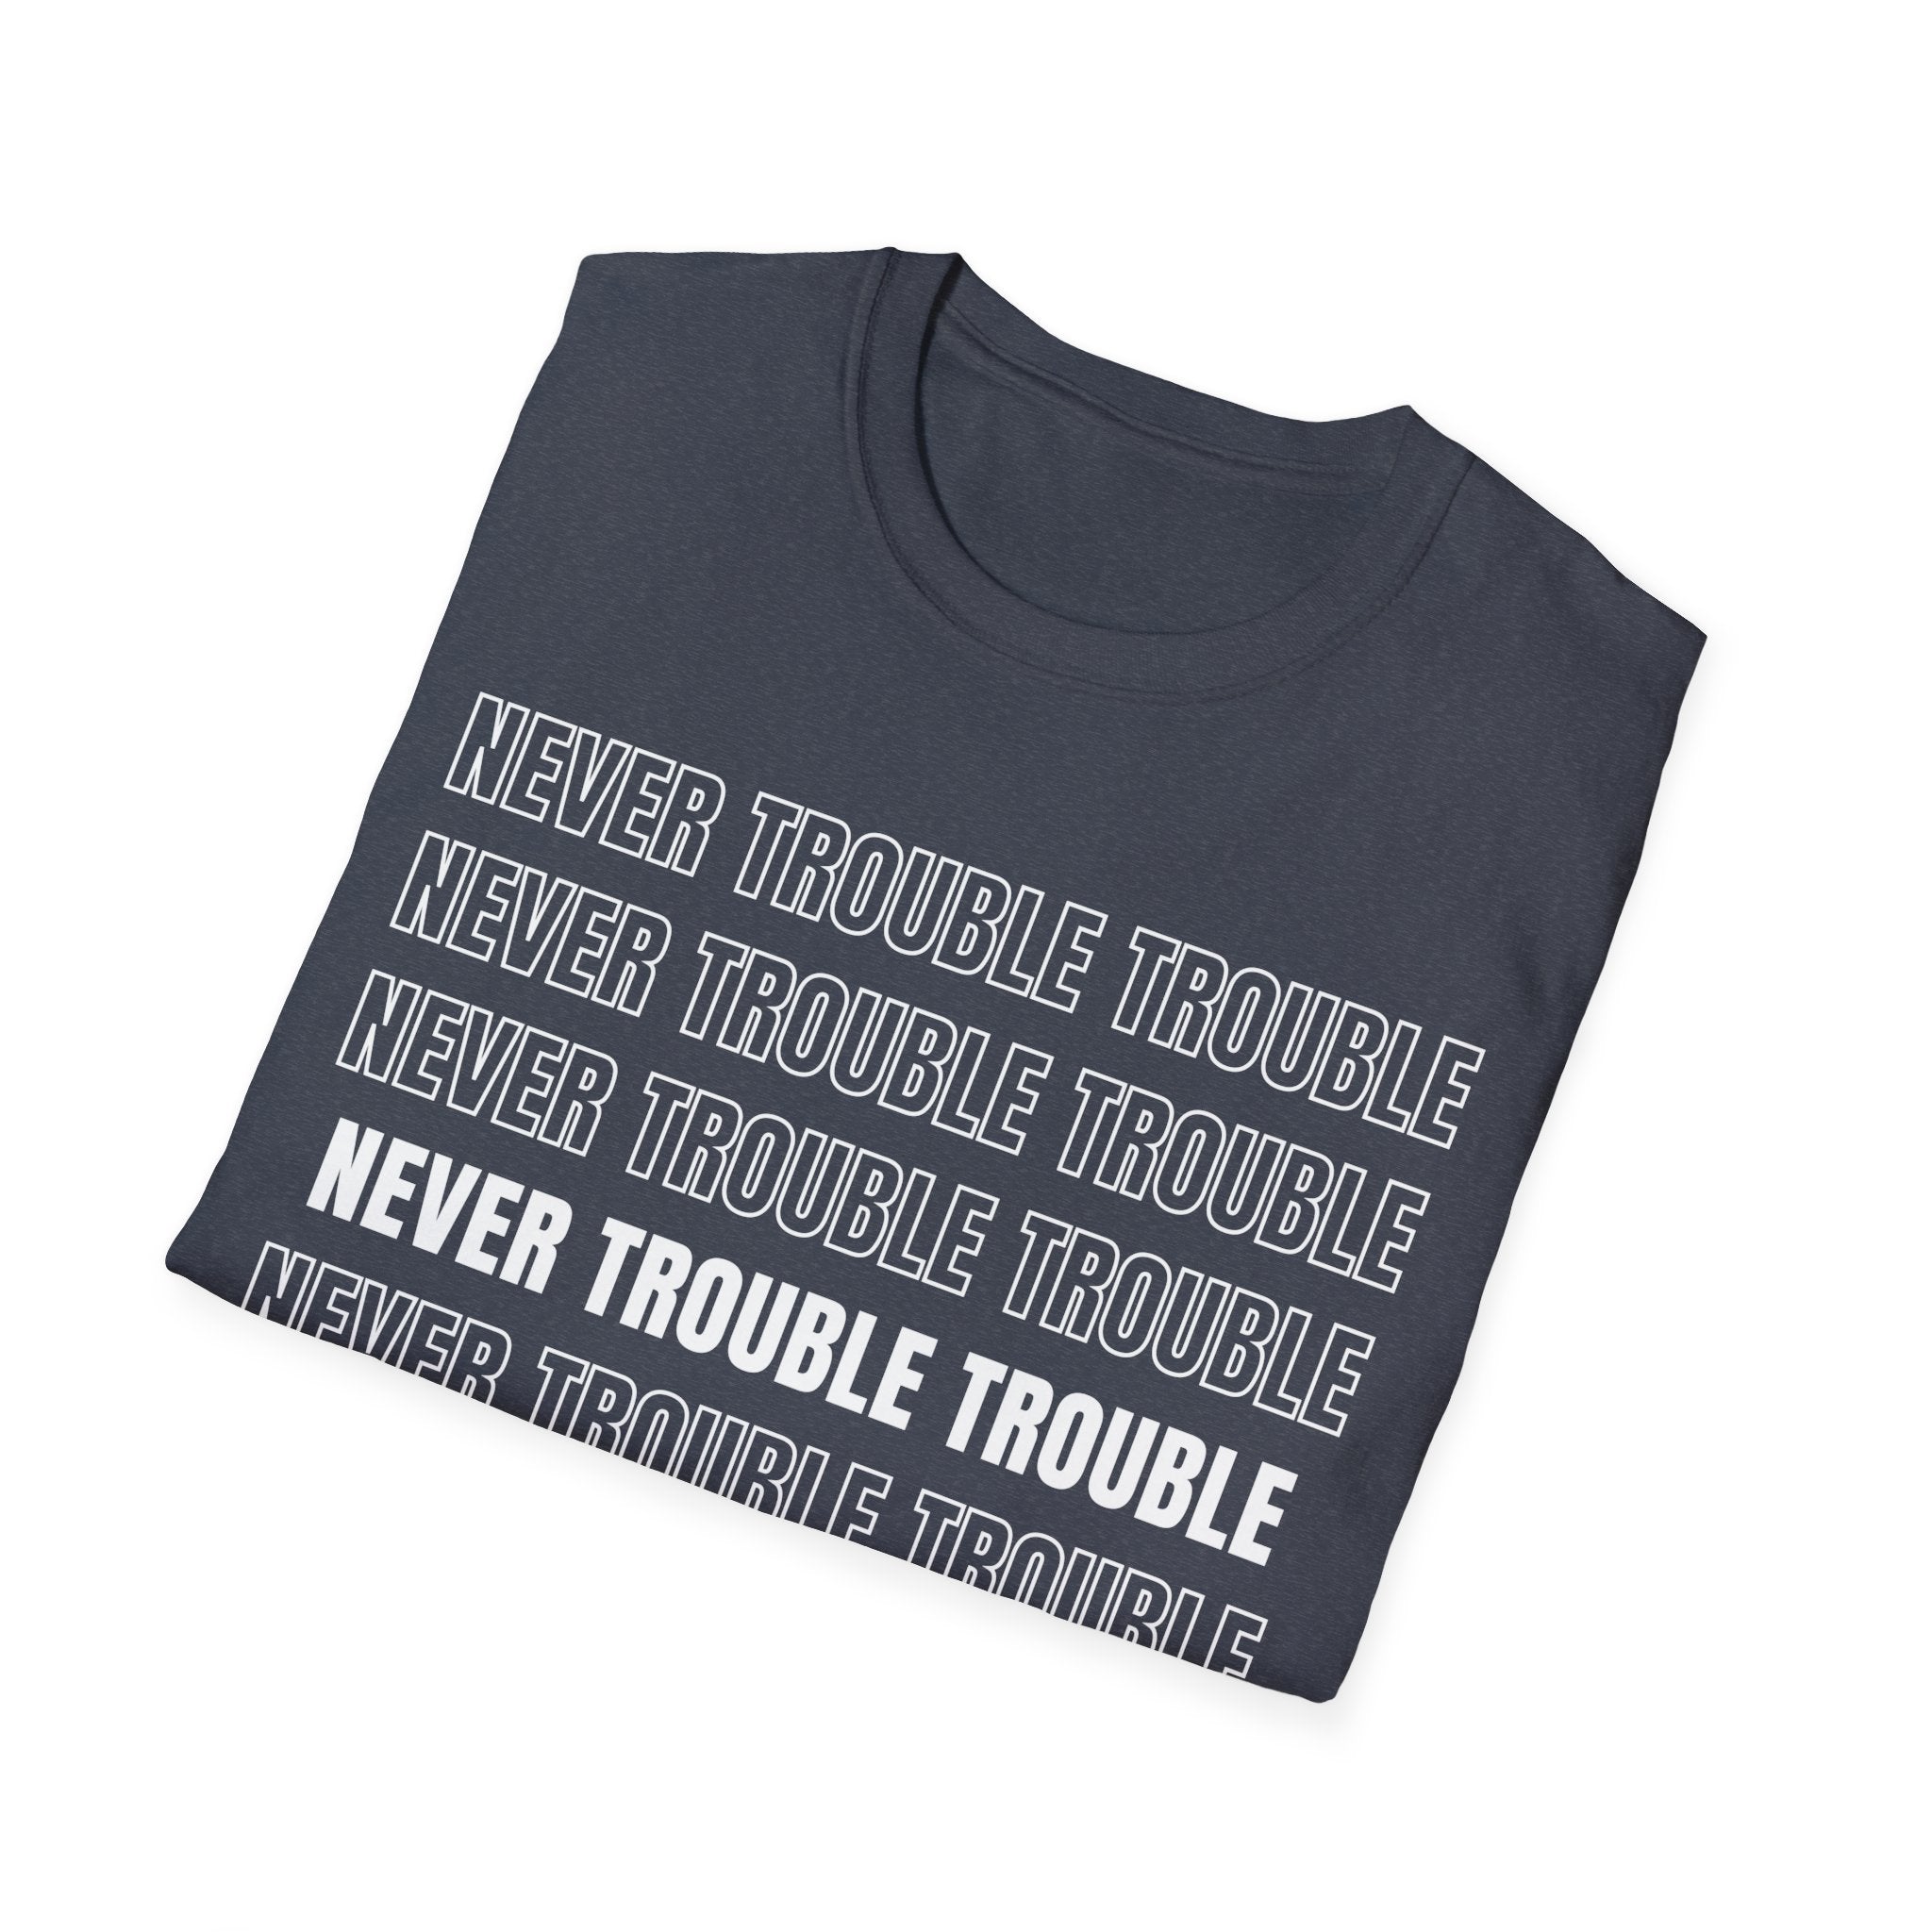 Never Trouble Trouble Unisex Softstyle Crew Neck T-Shirt, Teacher Shirt, Gift Shirt, Funny T-shirt, Motivational Shirt